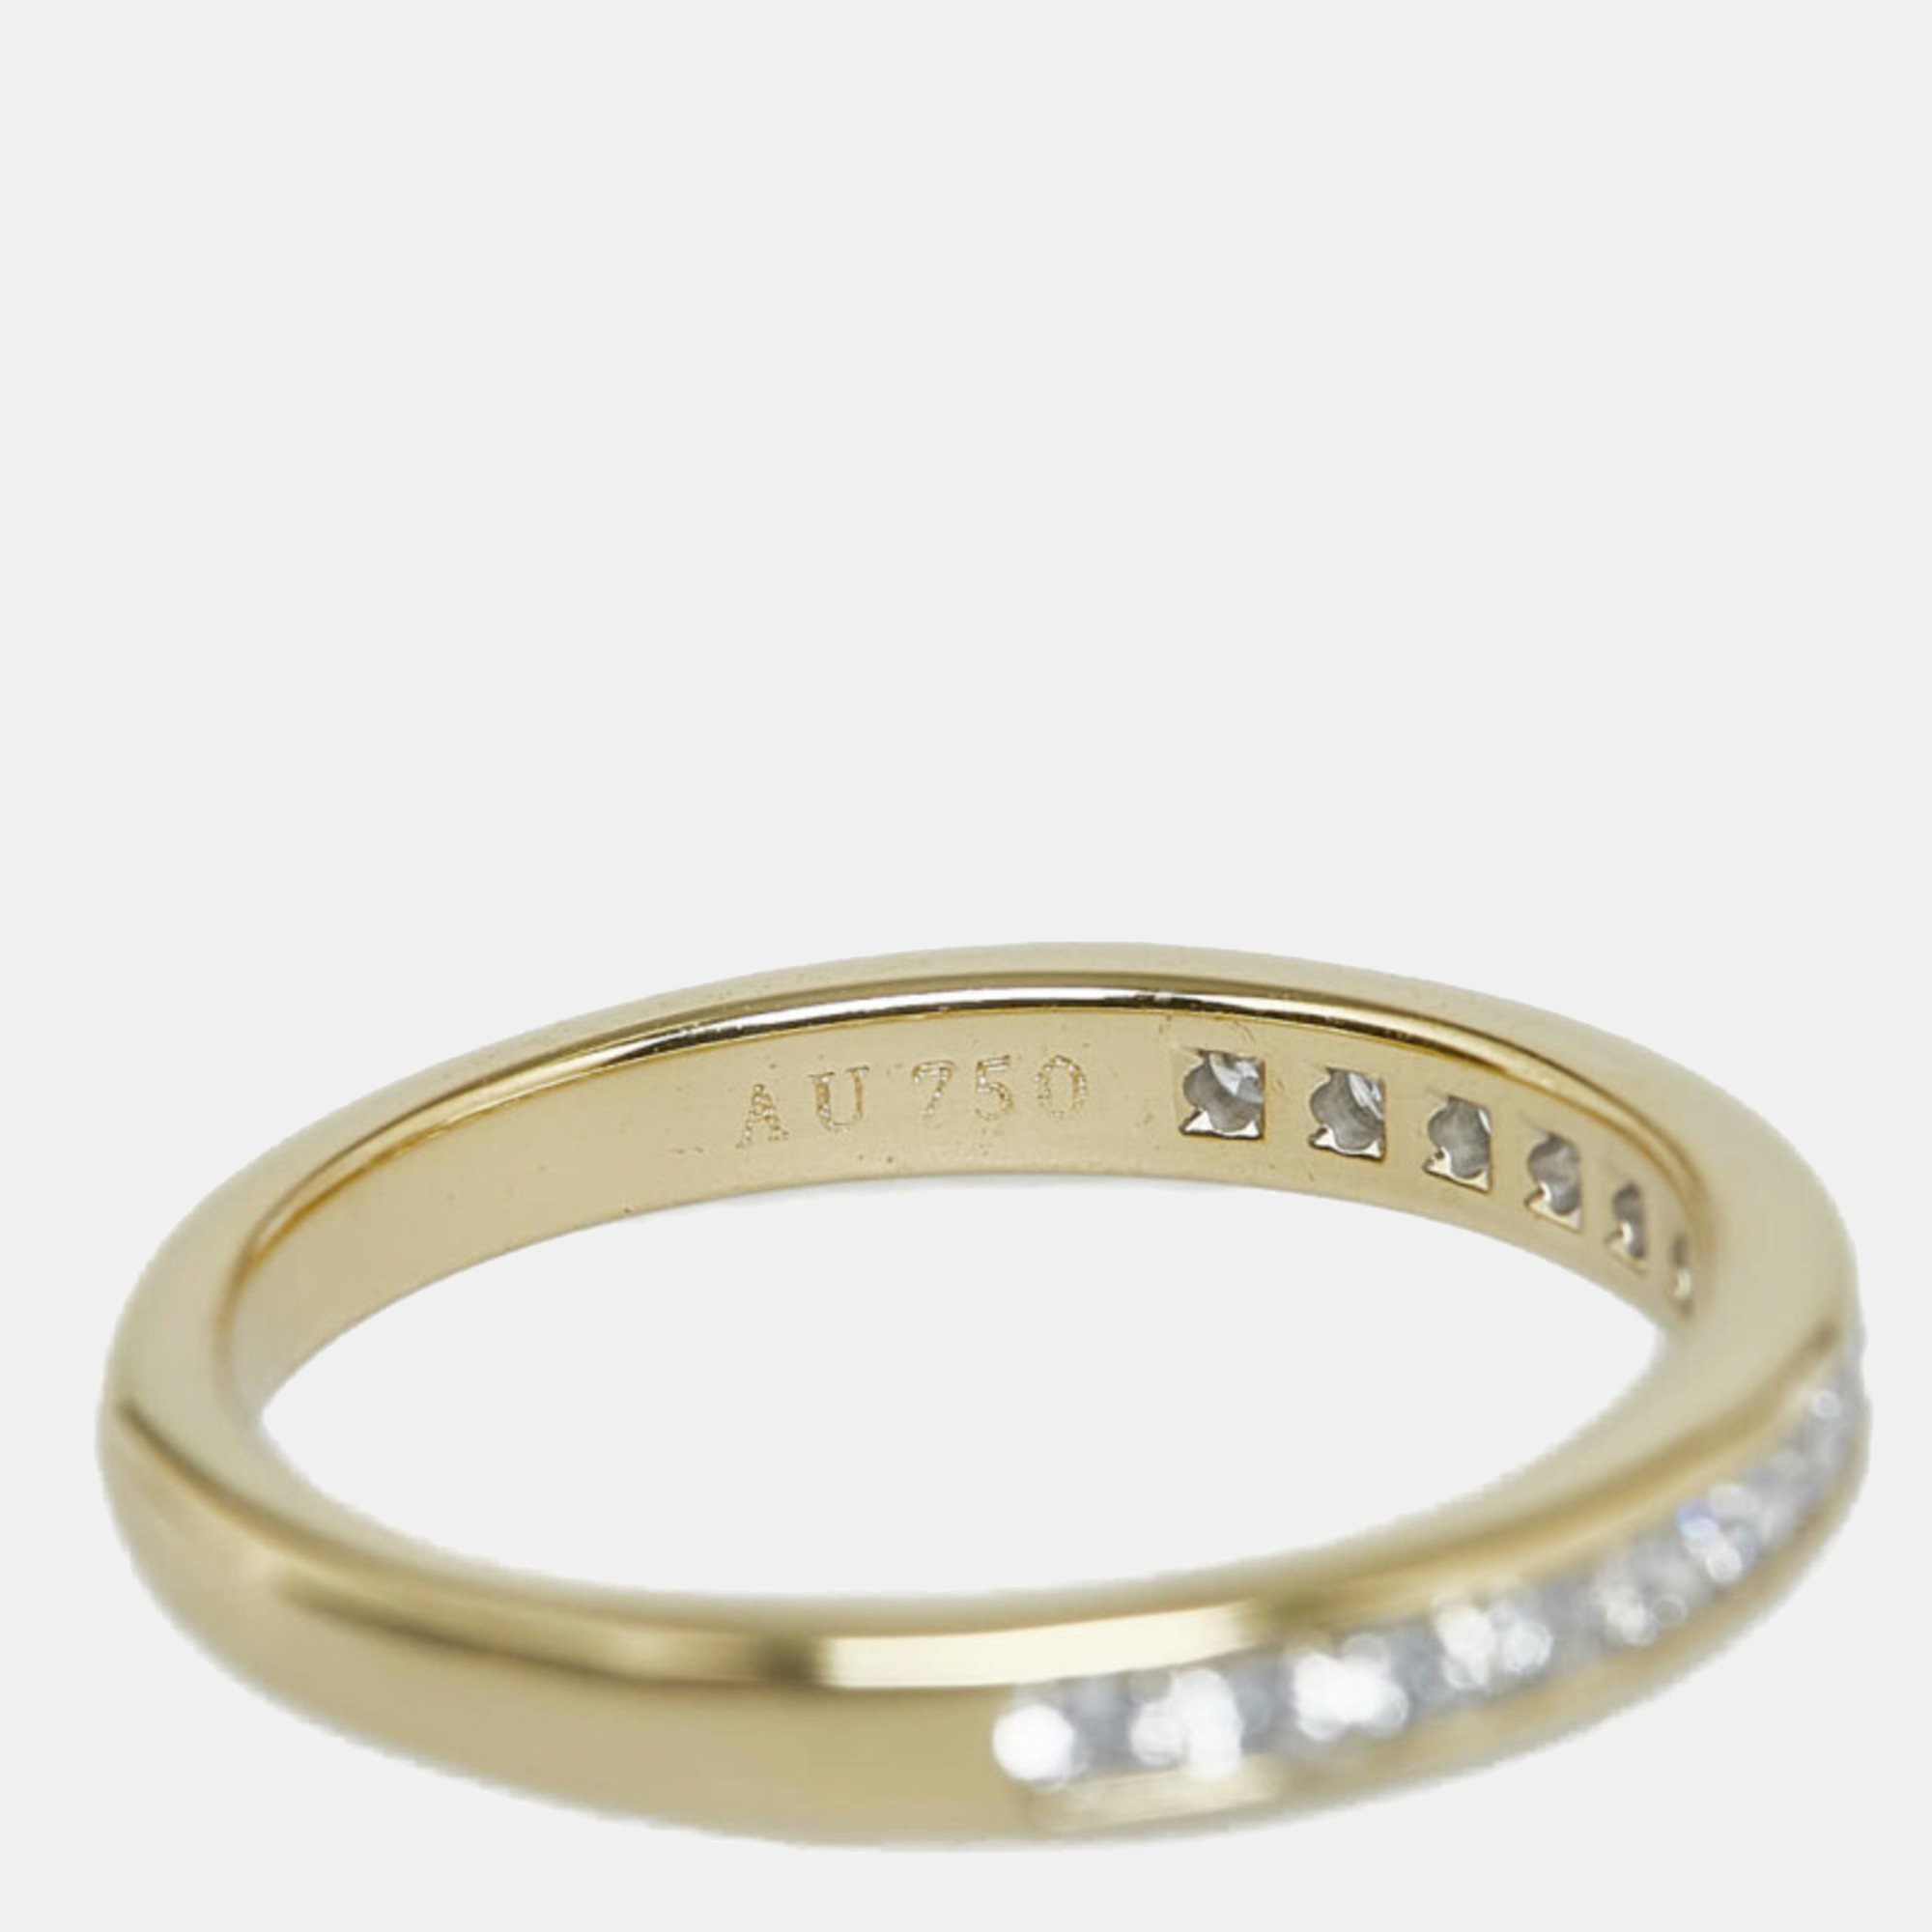 Tiffany & Co. Tiffany Setting 18K Yellow Gold Diamond Ring EU 49